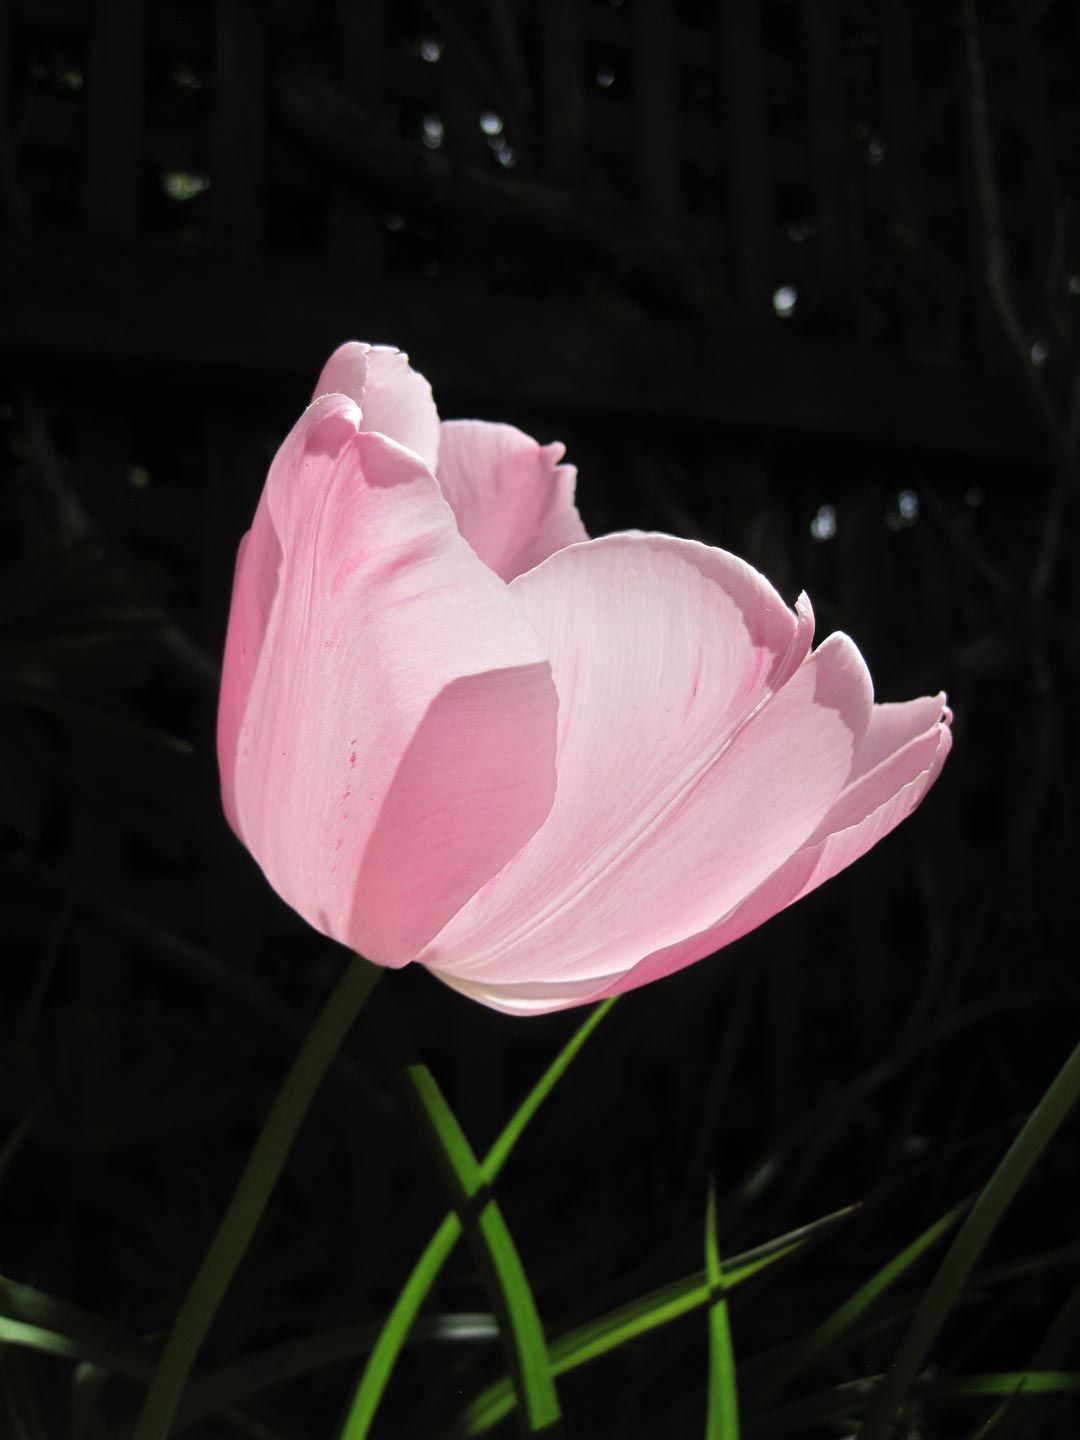  Tulip. Garden. Garden Maintenance  